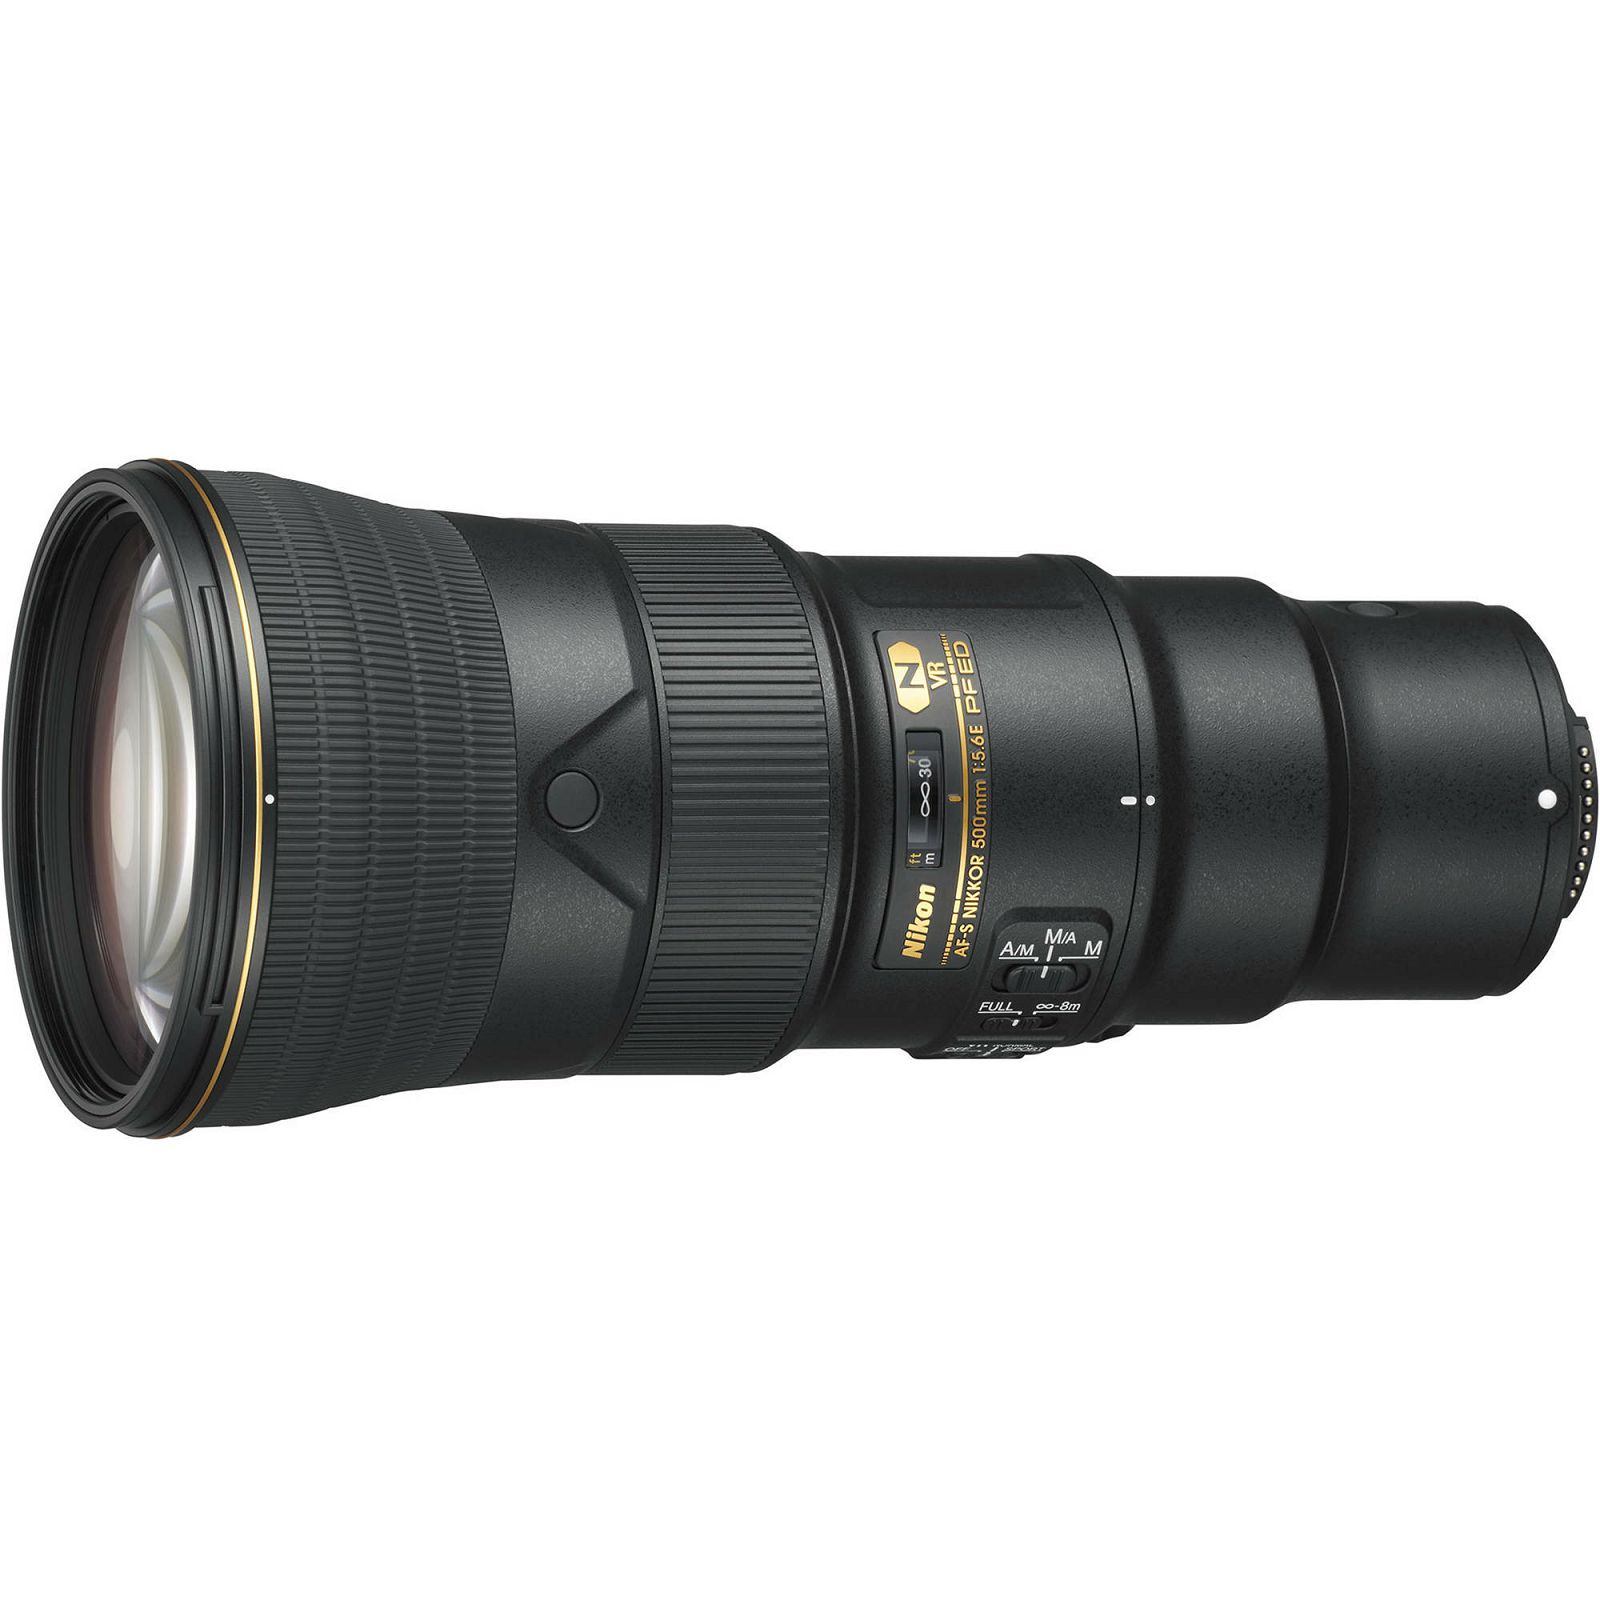 Nikon AF-S 500mm f/5.6E PF ED VR FX telefoto objektiv Nikkor auto focus zoom lens (JAA535DA)